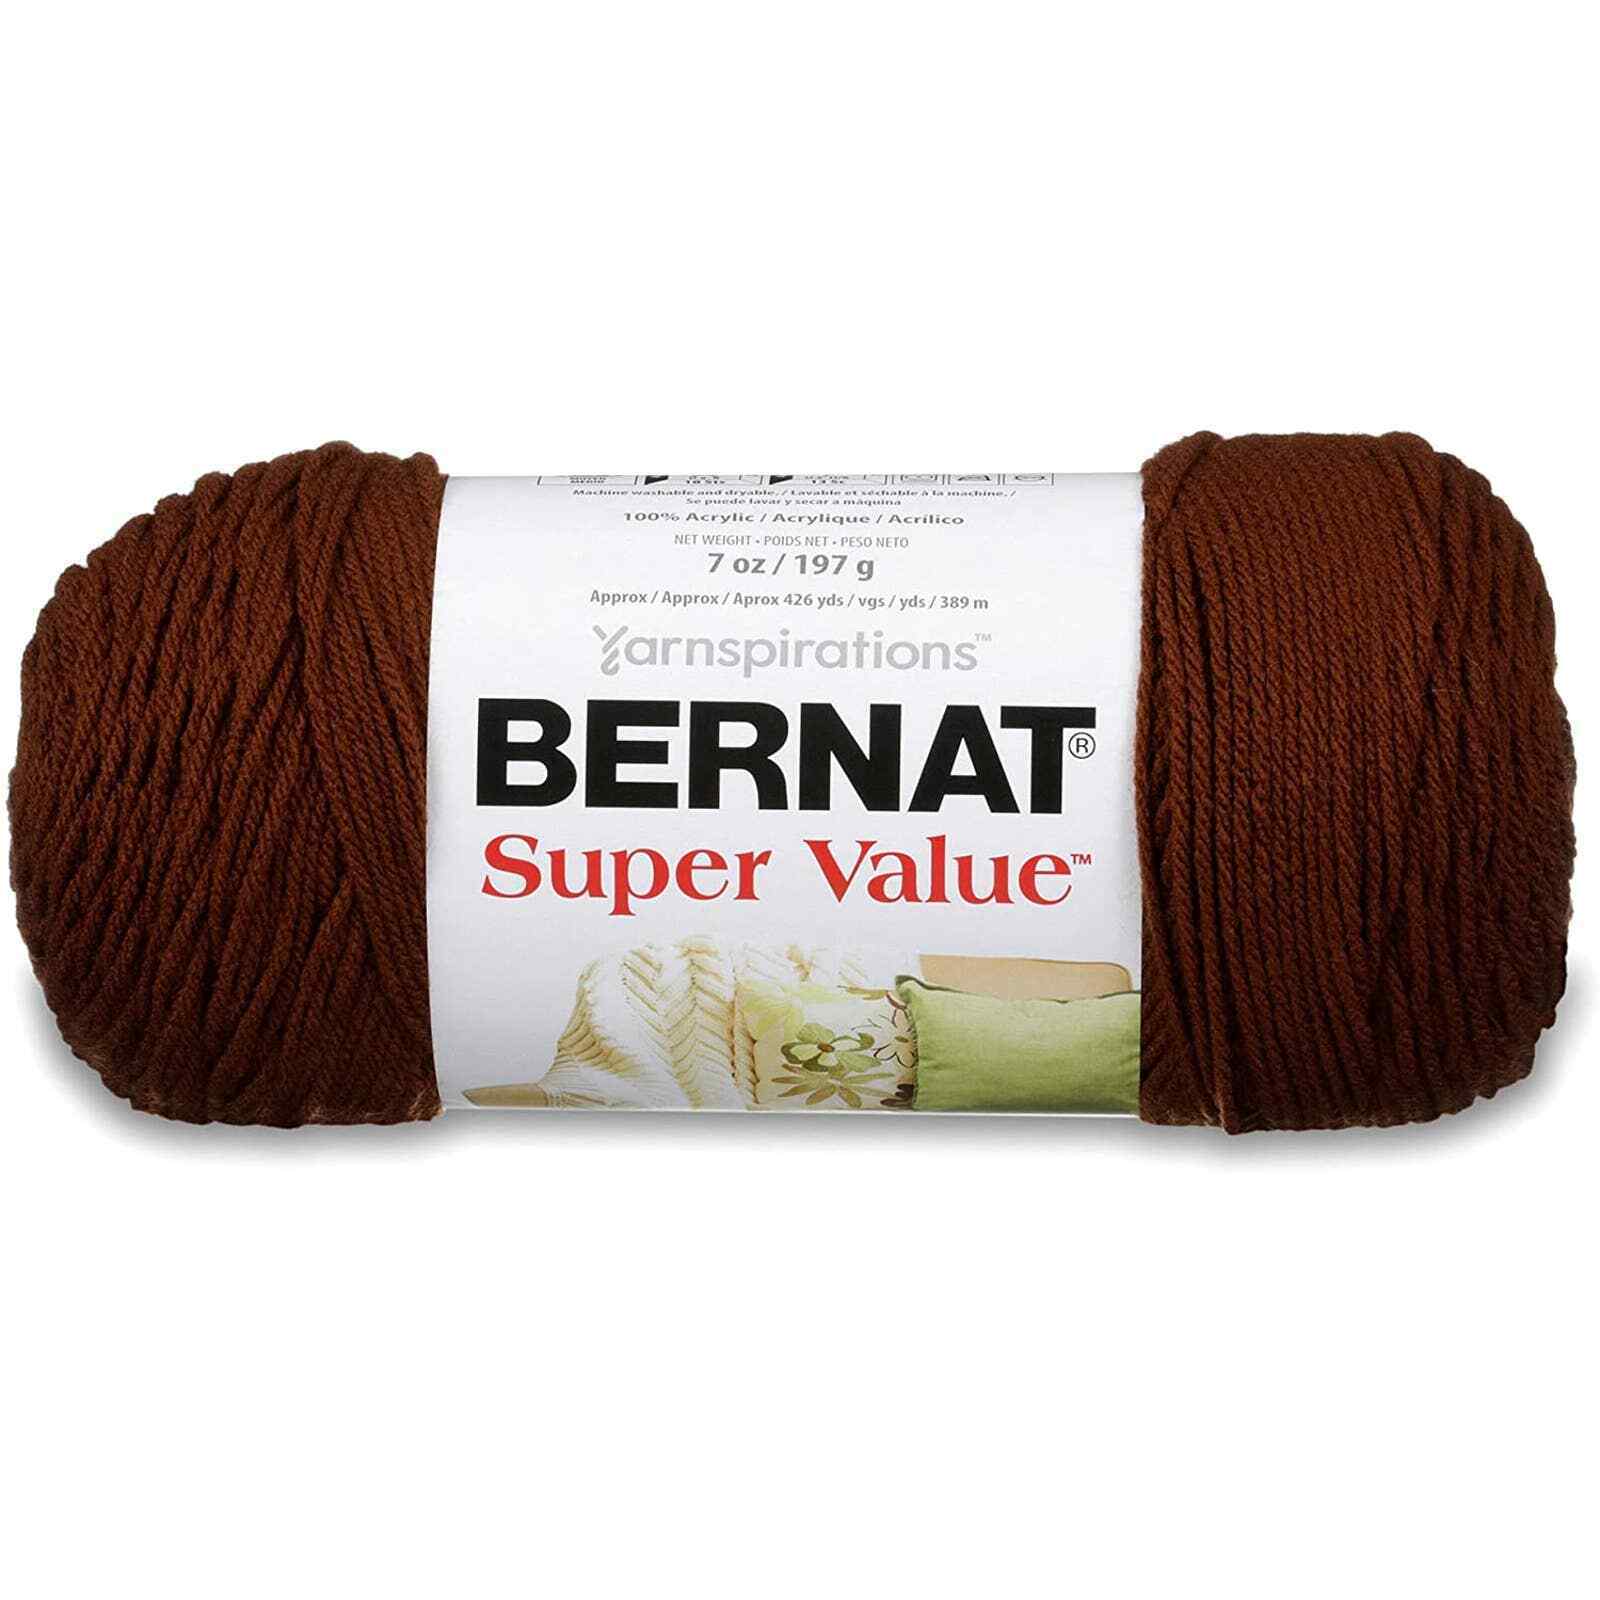 2oz Mixed Yarn Bundles - 100% Wool and Silk - Yarn Pieces to Use